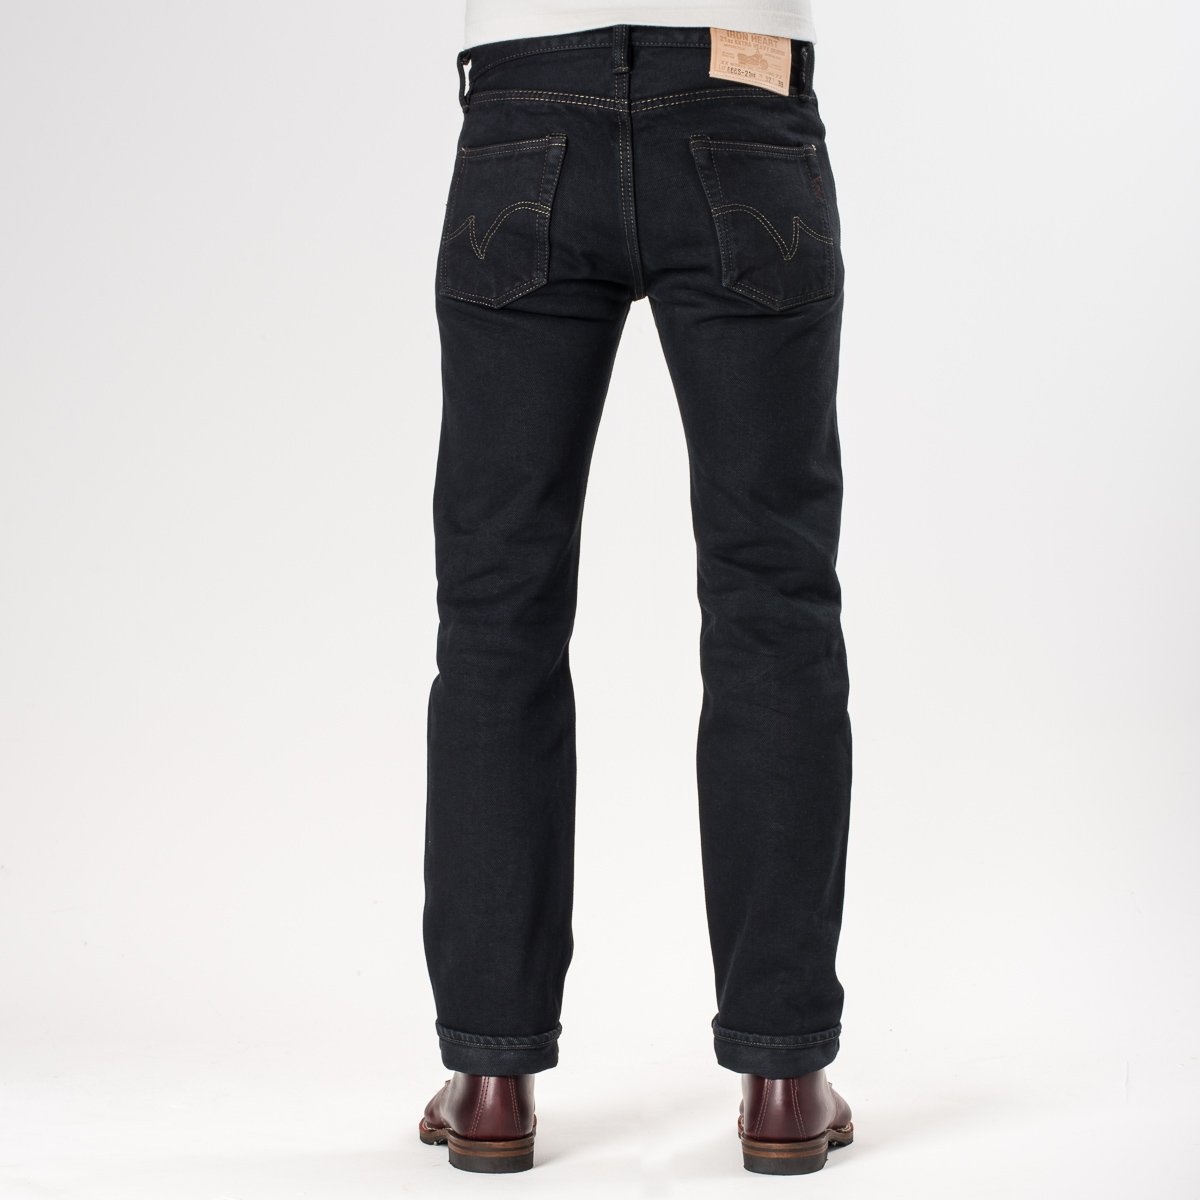 IH-666S-21od 21oz Selvedge Denim Slim Straight Cut Jeans - Indigo Overdyed Black - 3